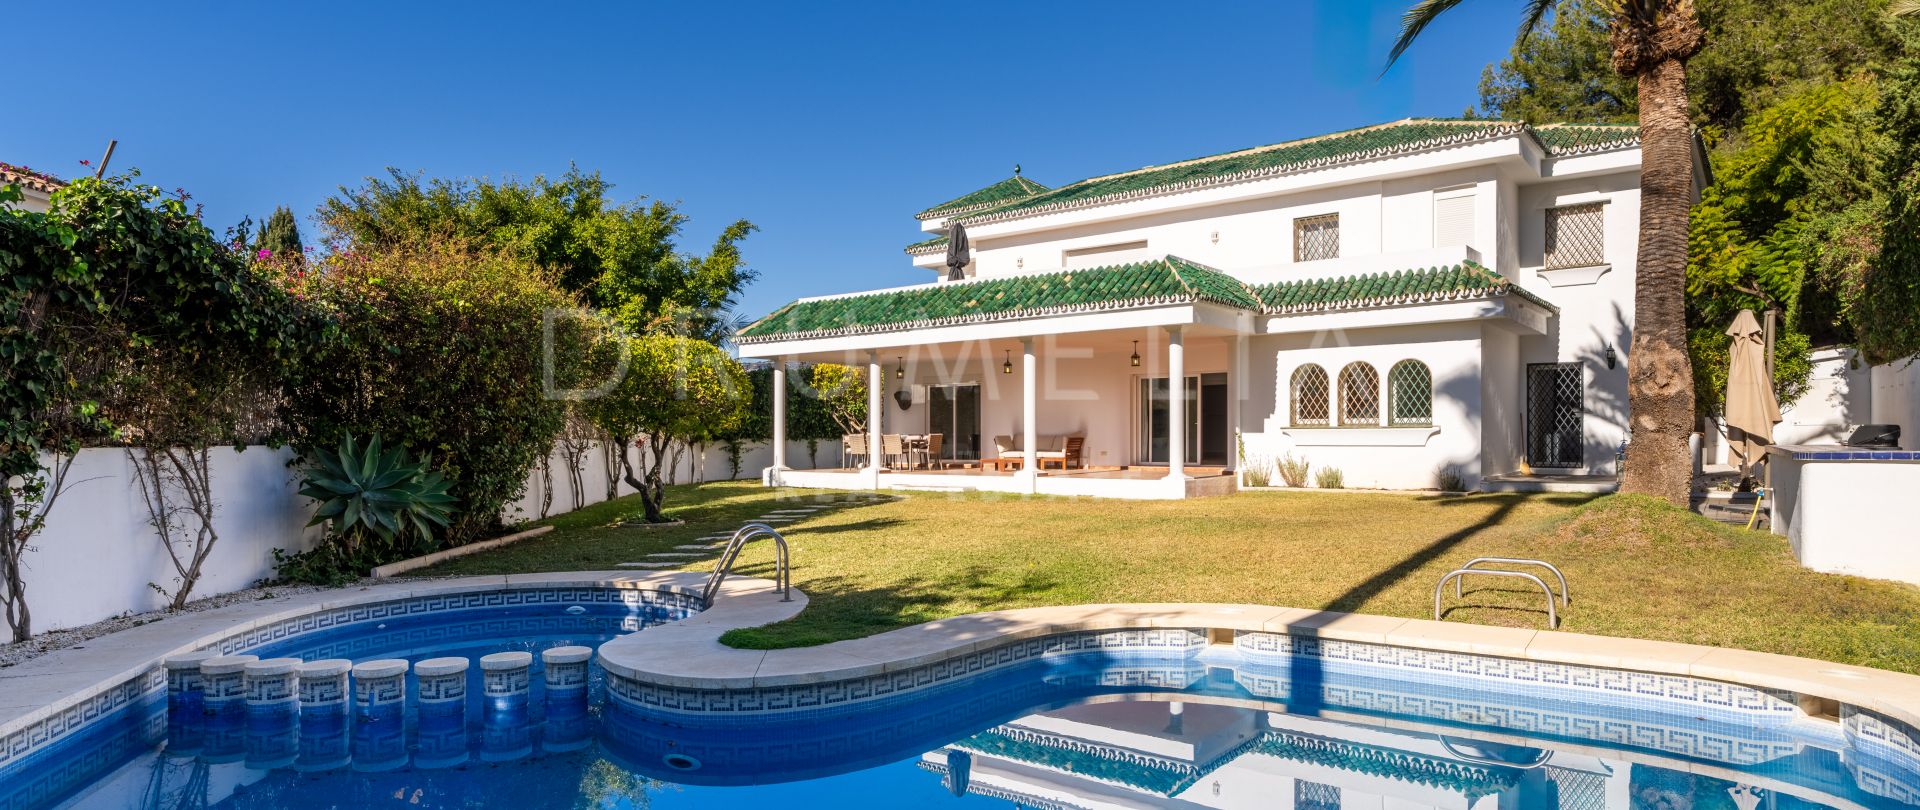 Traditional Mediterranean Villa with Private Pool in the Prime Location, Nueva Andalucia